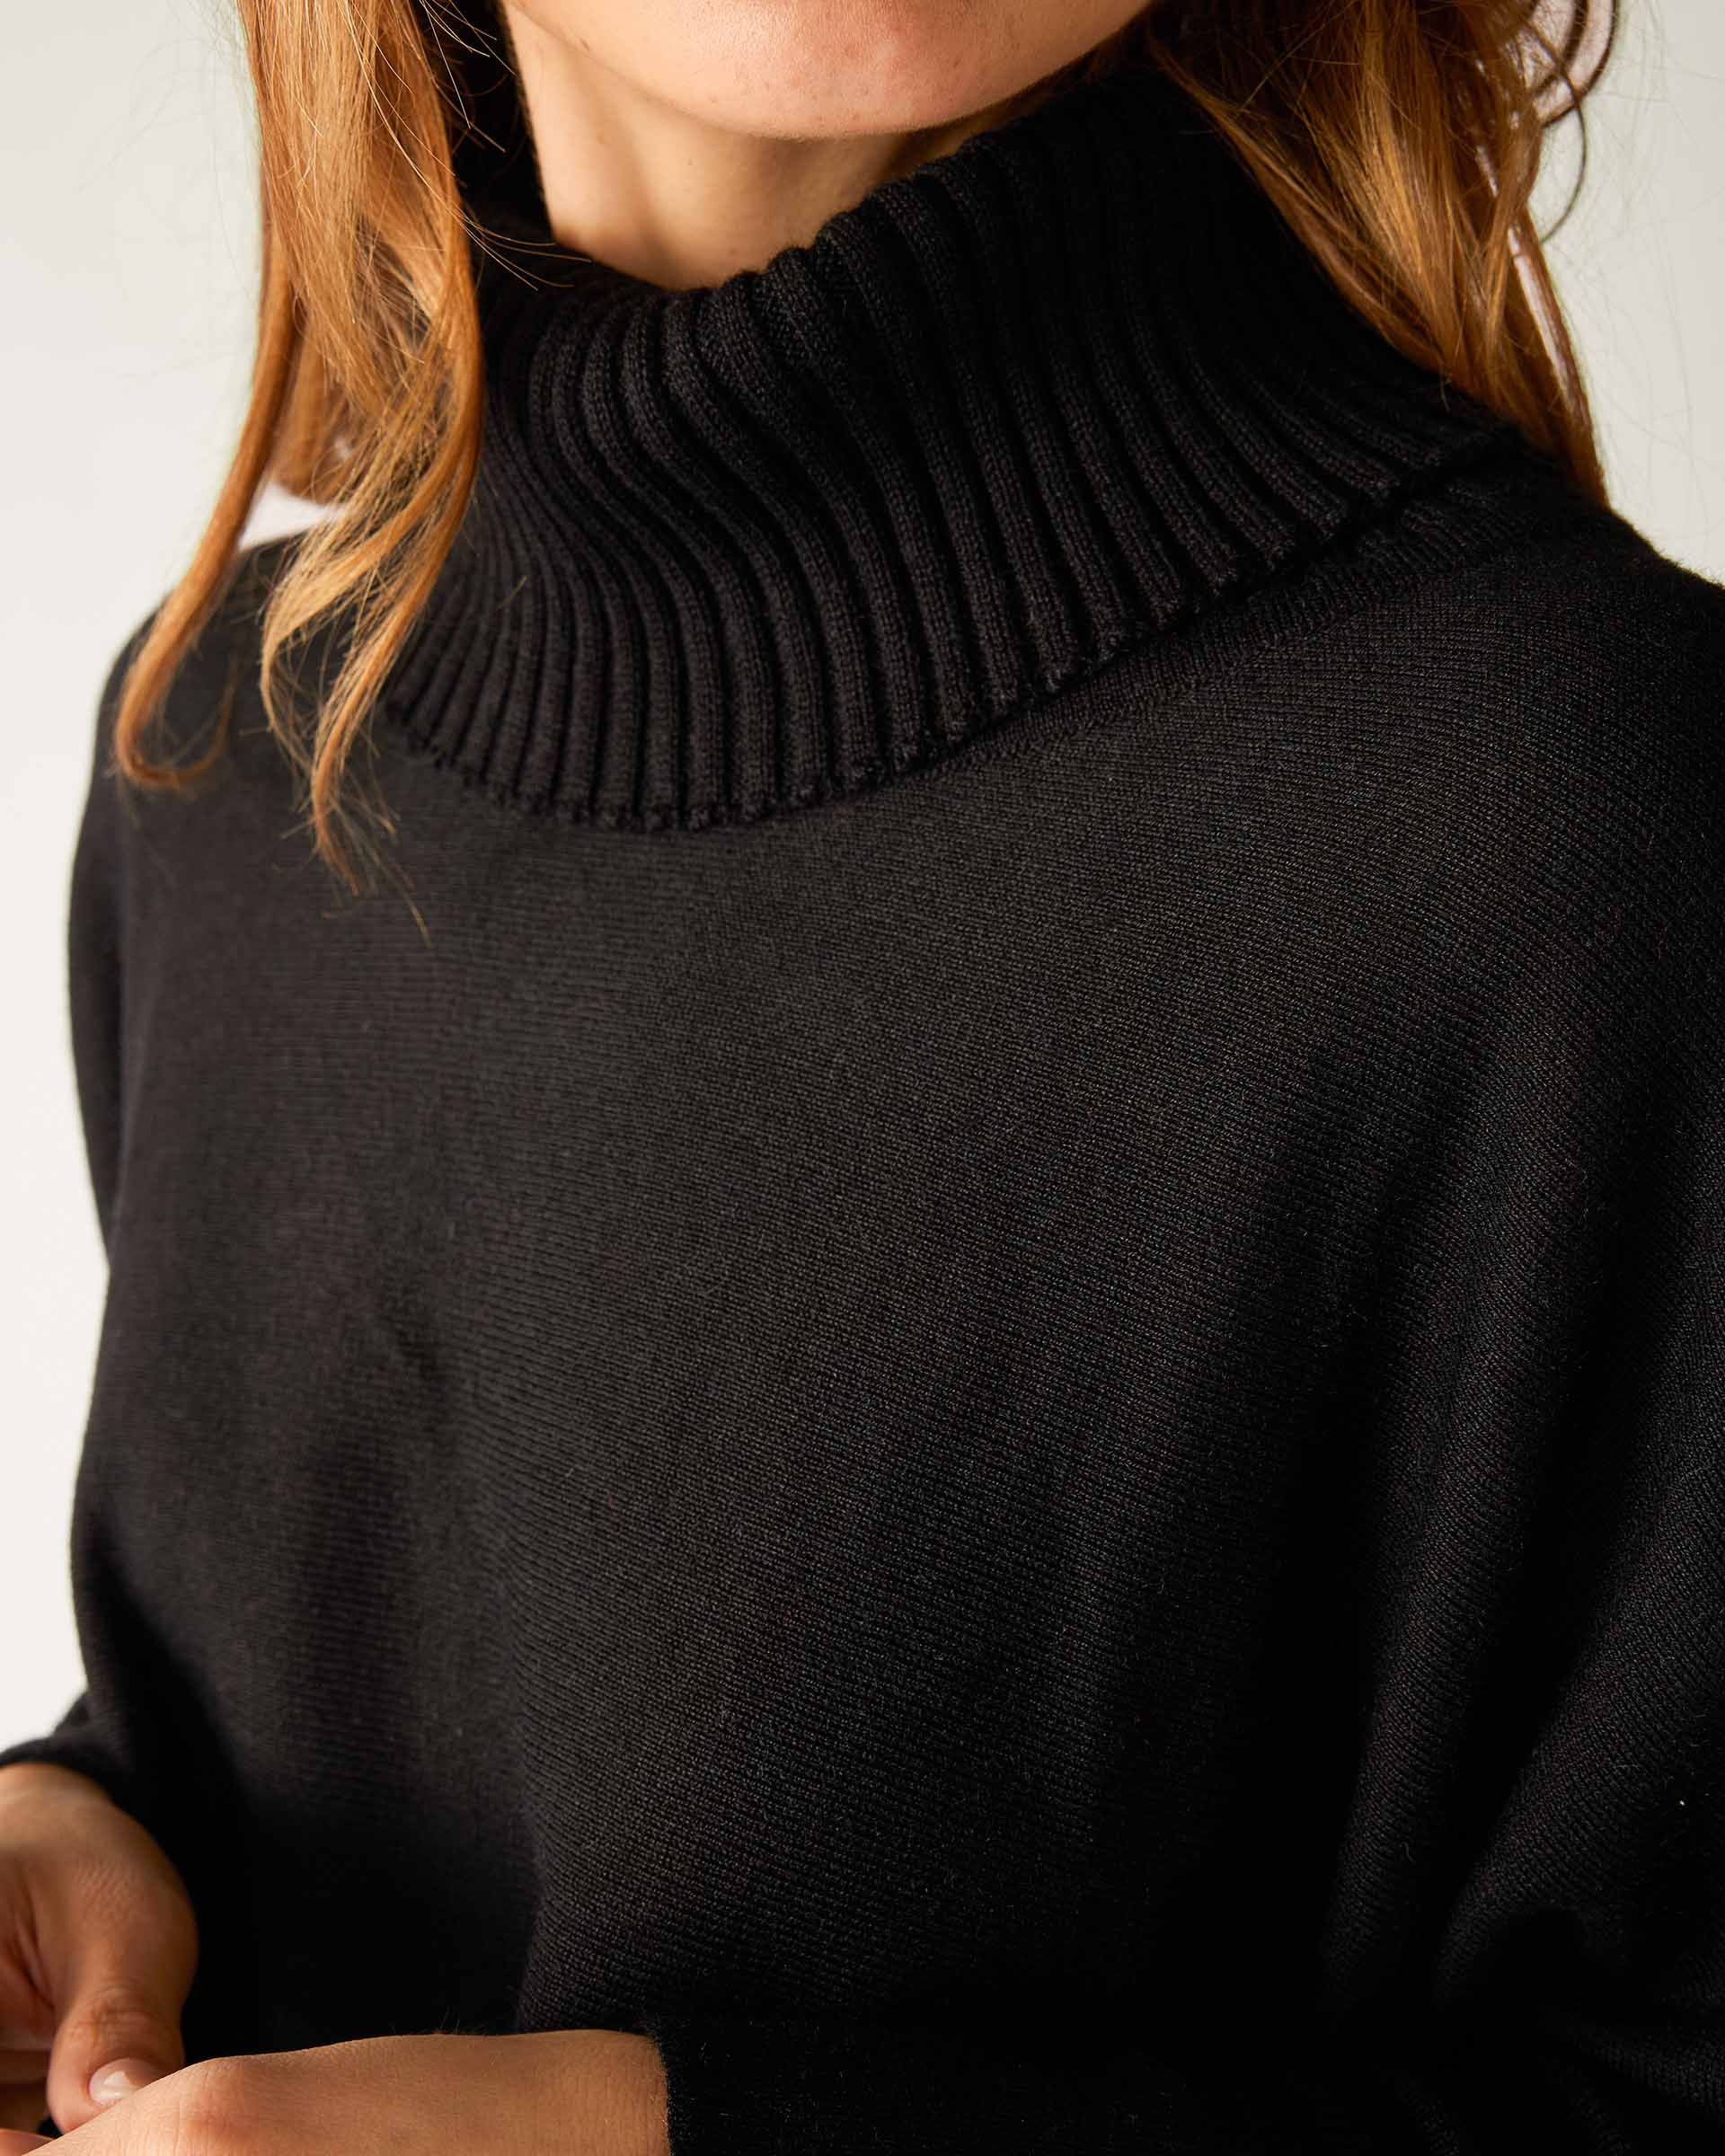 closeup of collar on woman wearing lightweight knit mersea catalina turtleneck sweater in black